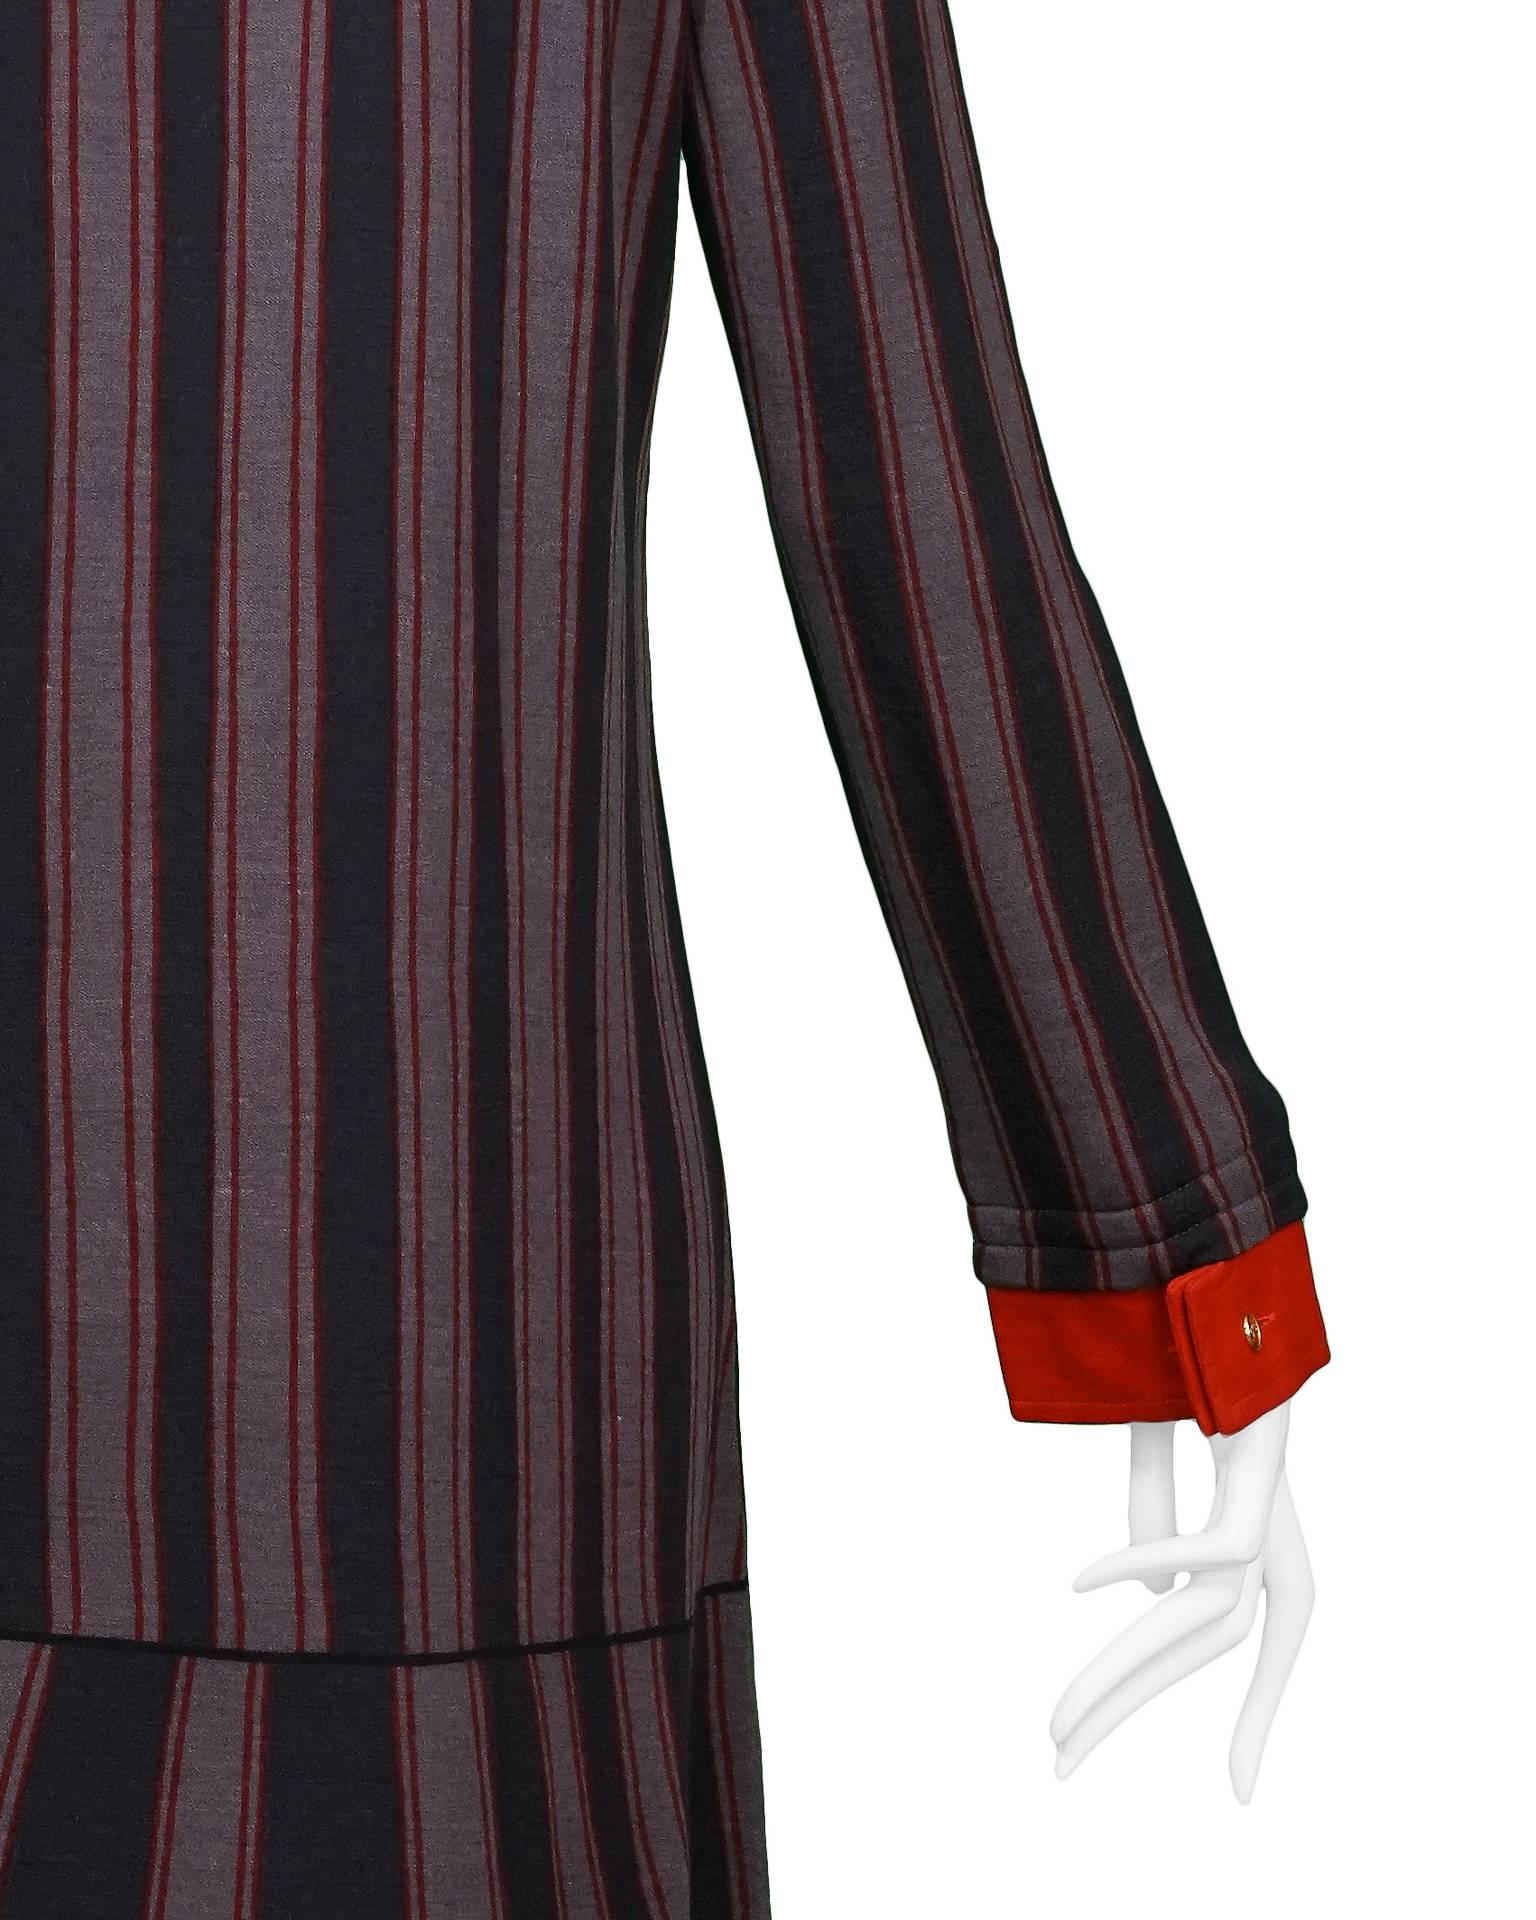 Roberta di Camerino Trompe Grey, Red & Black Day Dress In Excellent Condition For Sale In Los Angeles, CA